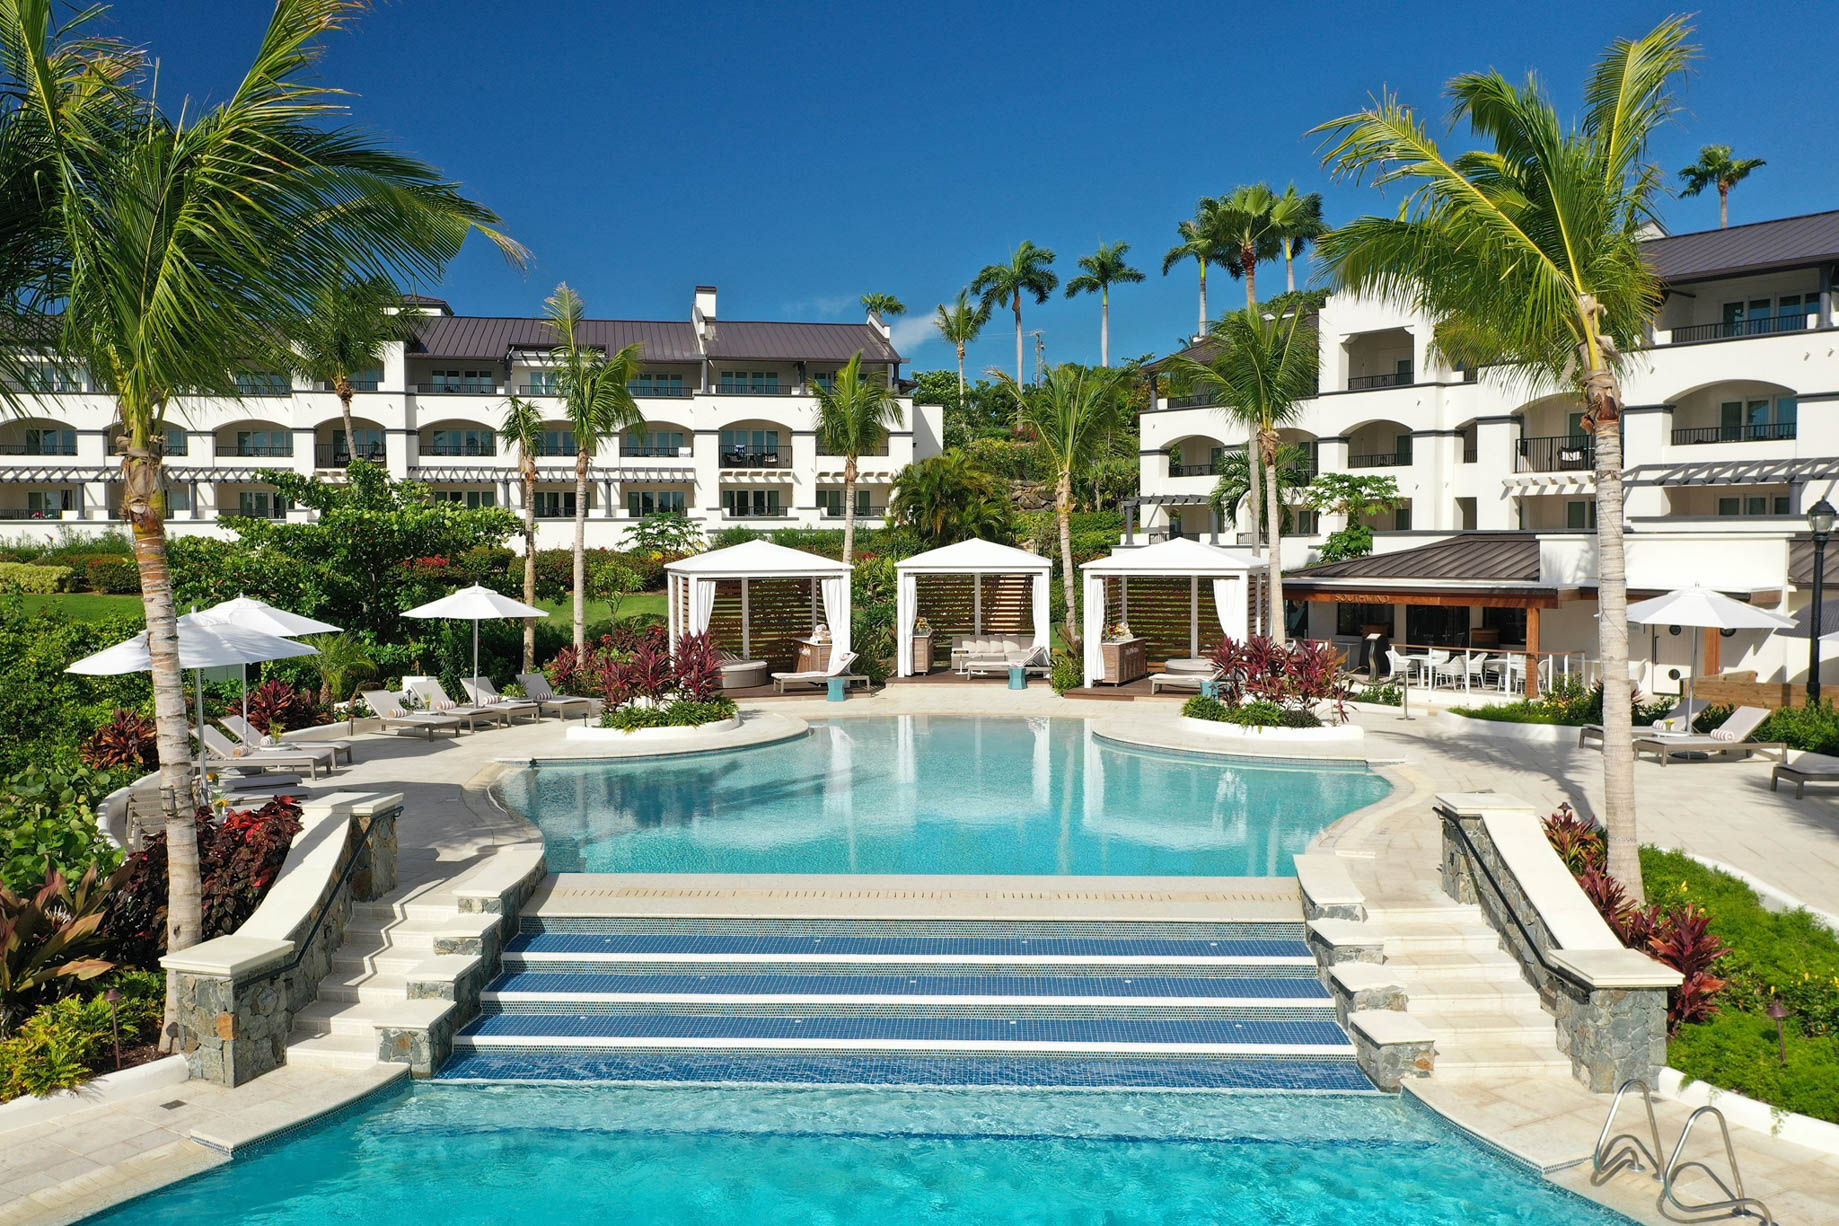 The Ritz-Carlton, St. Thomas Resort - St. Thomas, U.S. Virgin Islands - Exterior Pool View